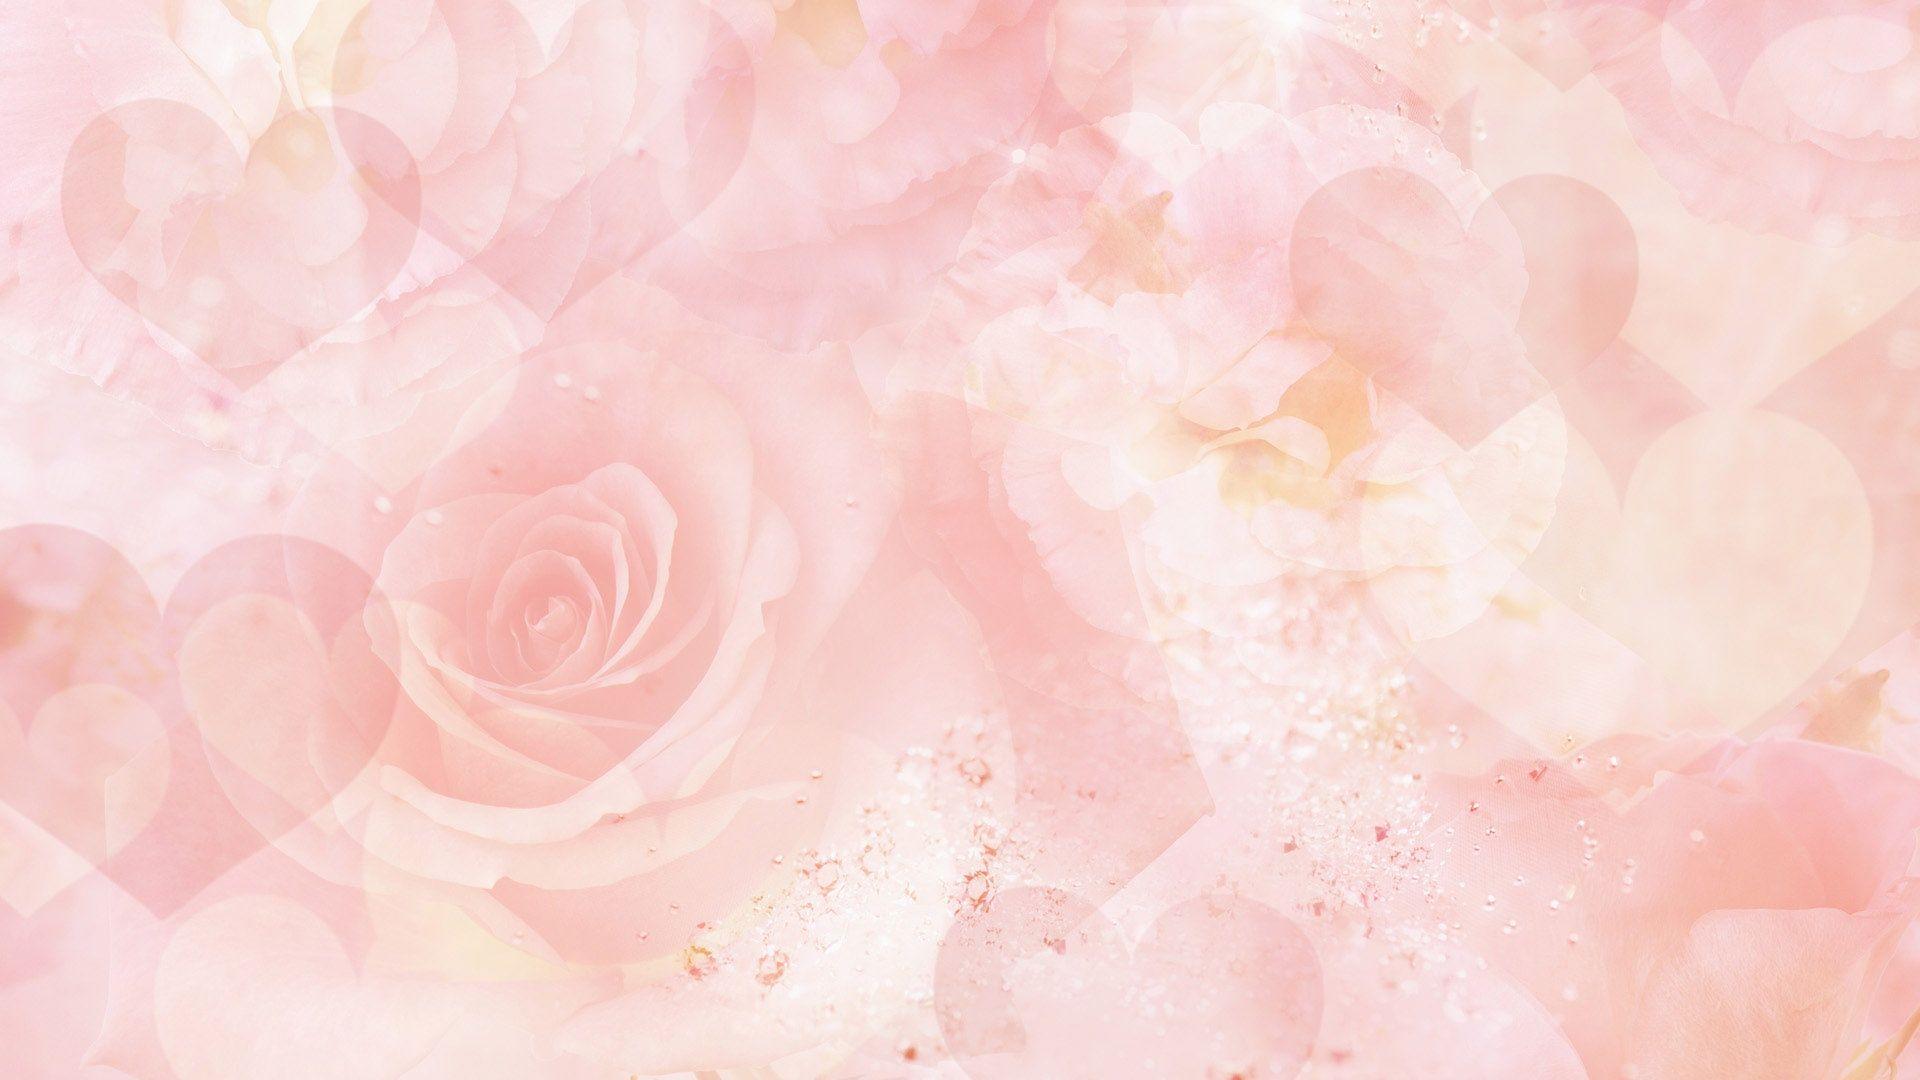 Background Flower 9 HD Wallpaper 1080p. Flower